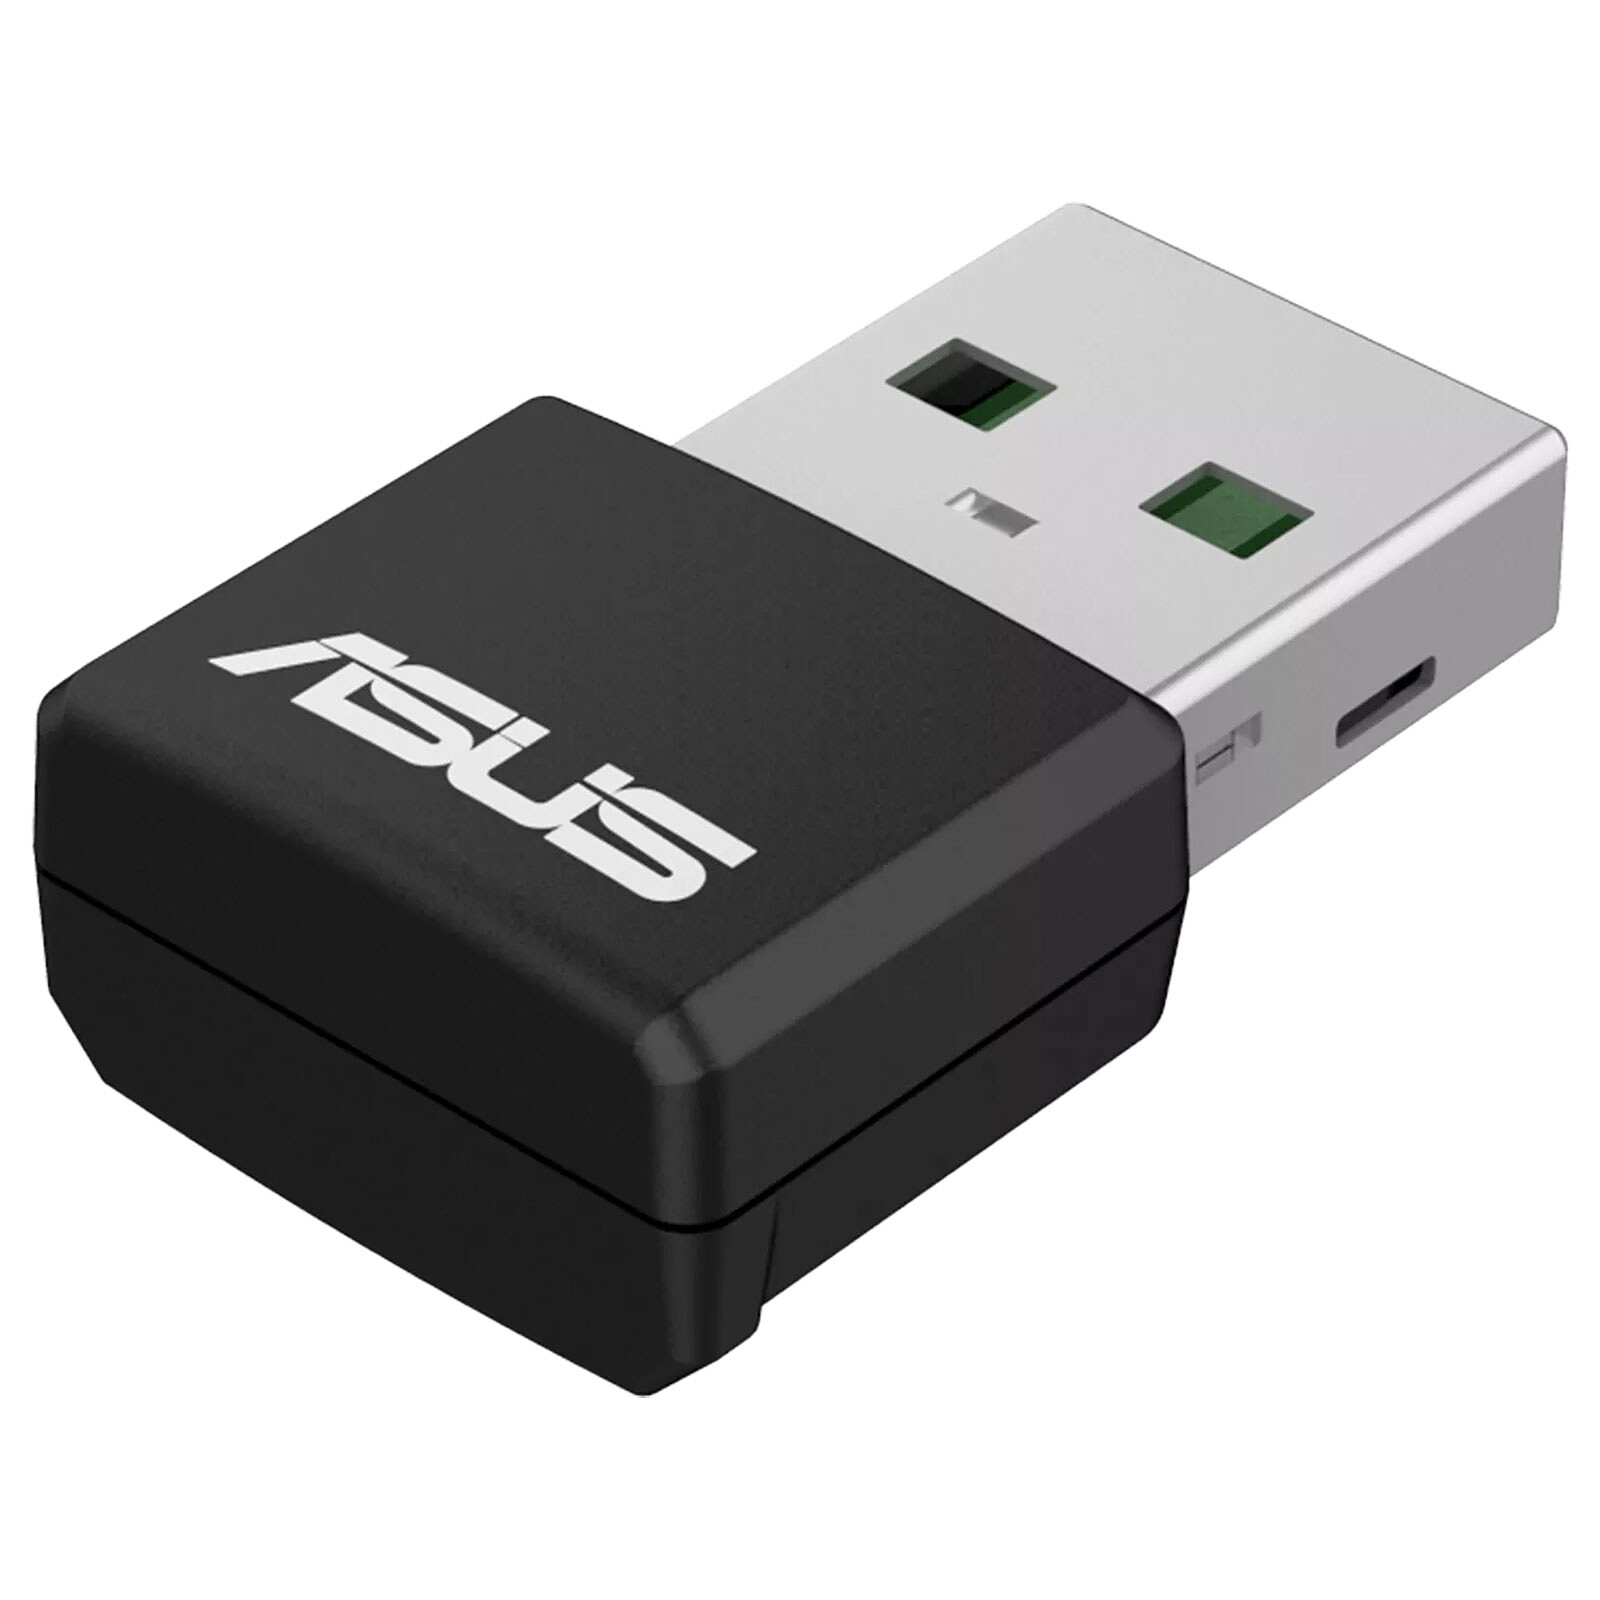 ASUS Clé USB WiFi AX USB-AX56